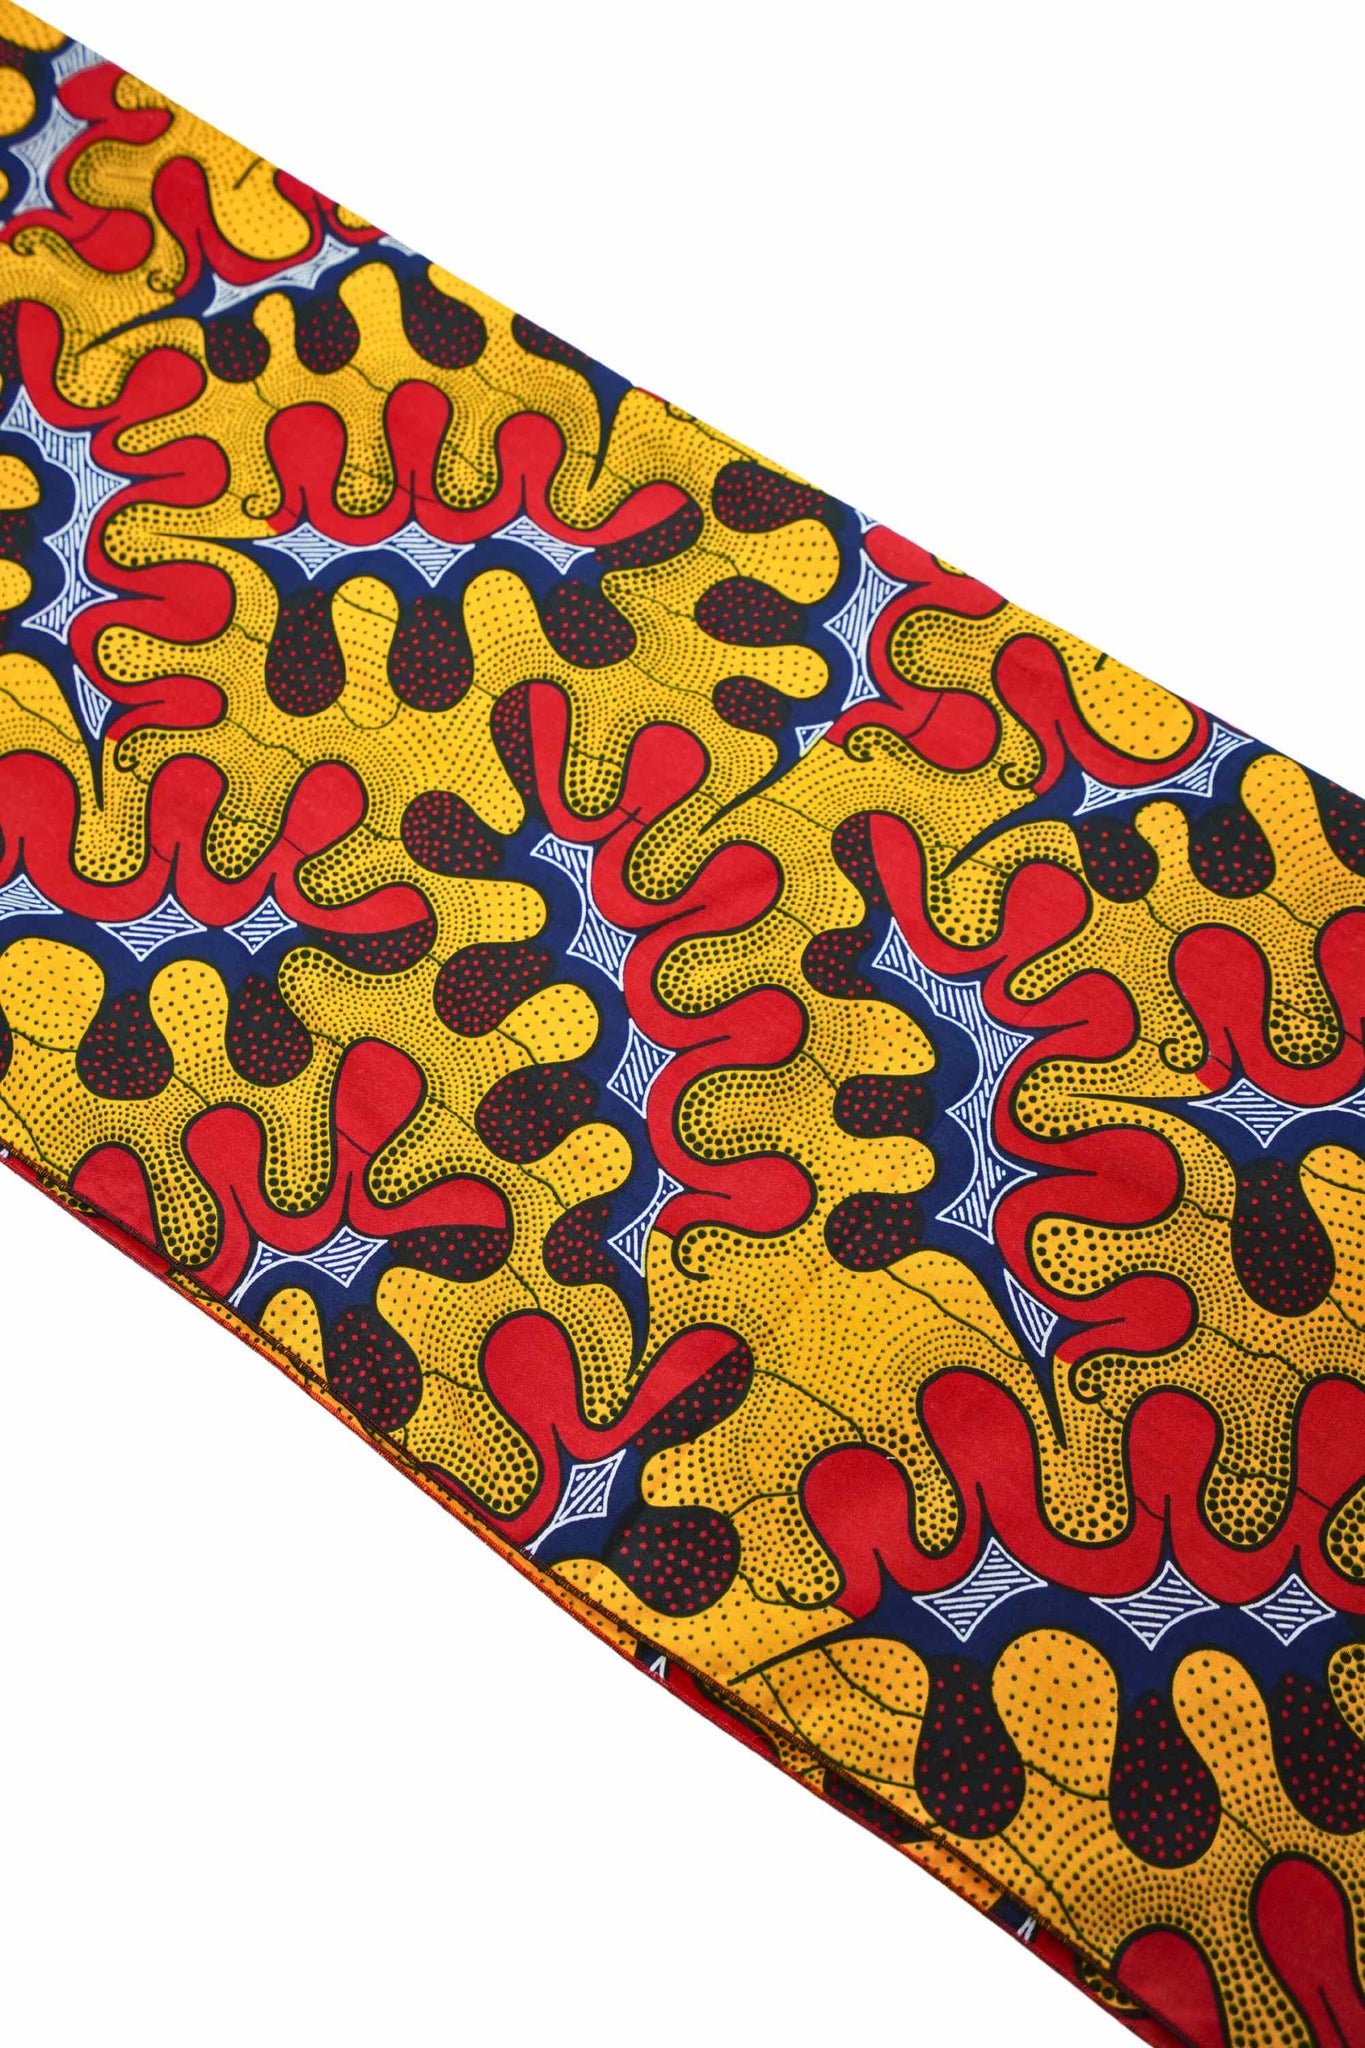 Aba Headwrap - Orange and Yellow Awoulaba African Ankara Wax Cotton Print